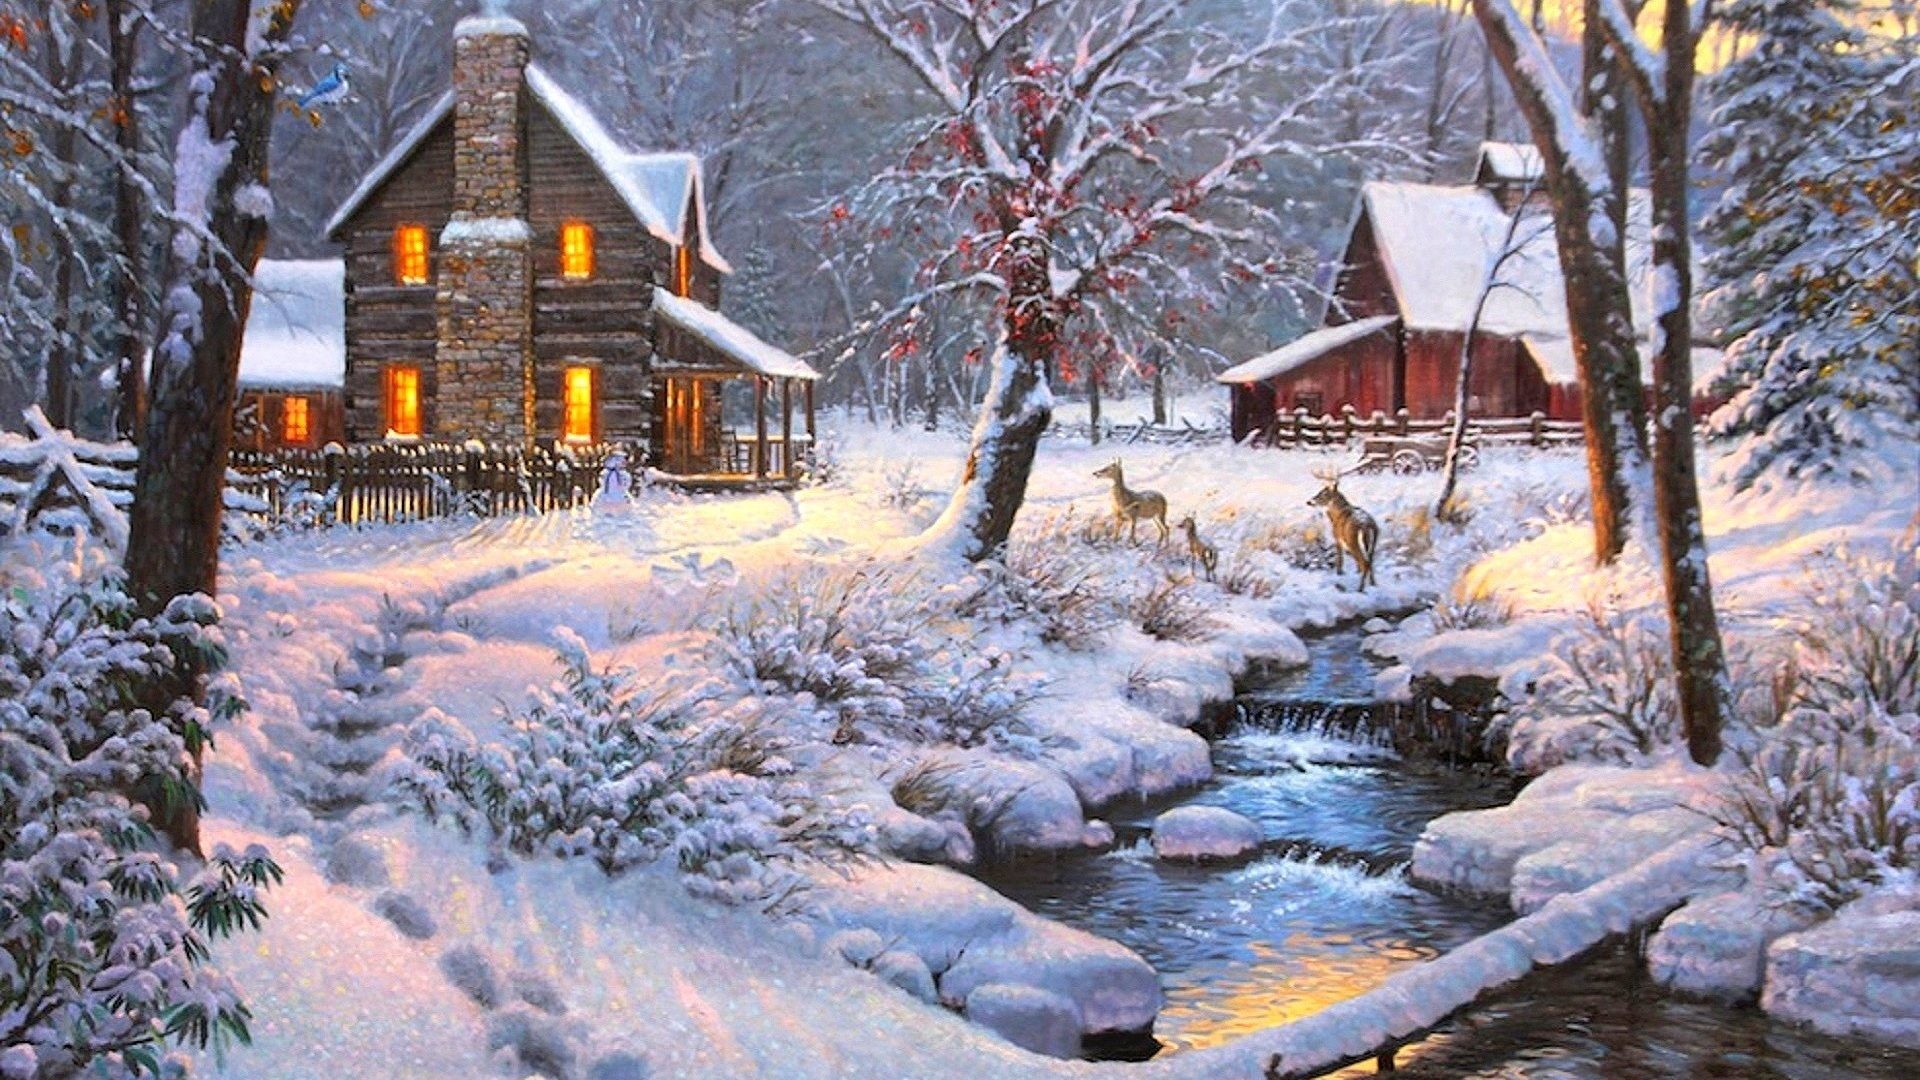 1920x1080 Paintings Tag - New Holidays Bird Love Deer Four Paintings Houses Drawings  Winter Attractions Trees Seasons